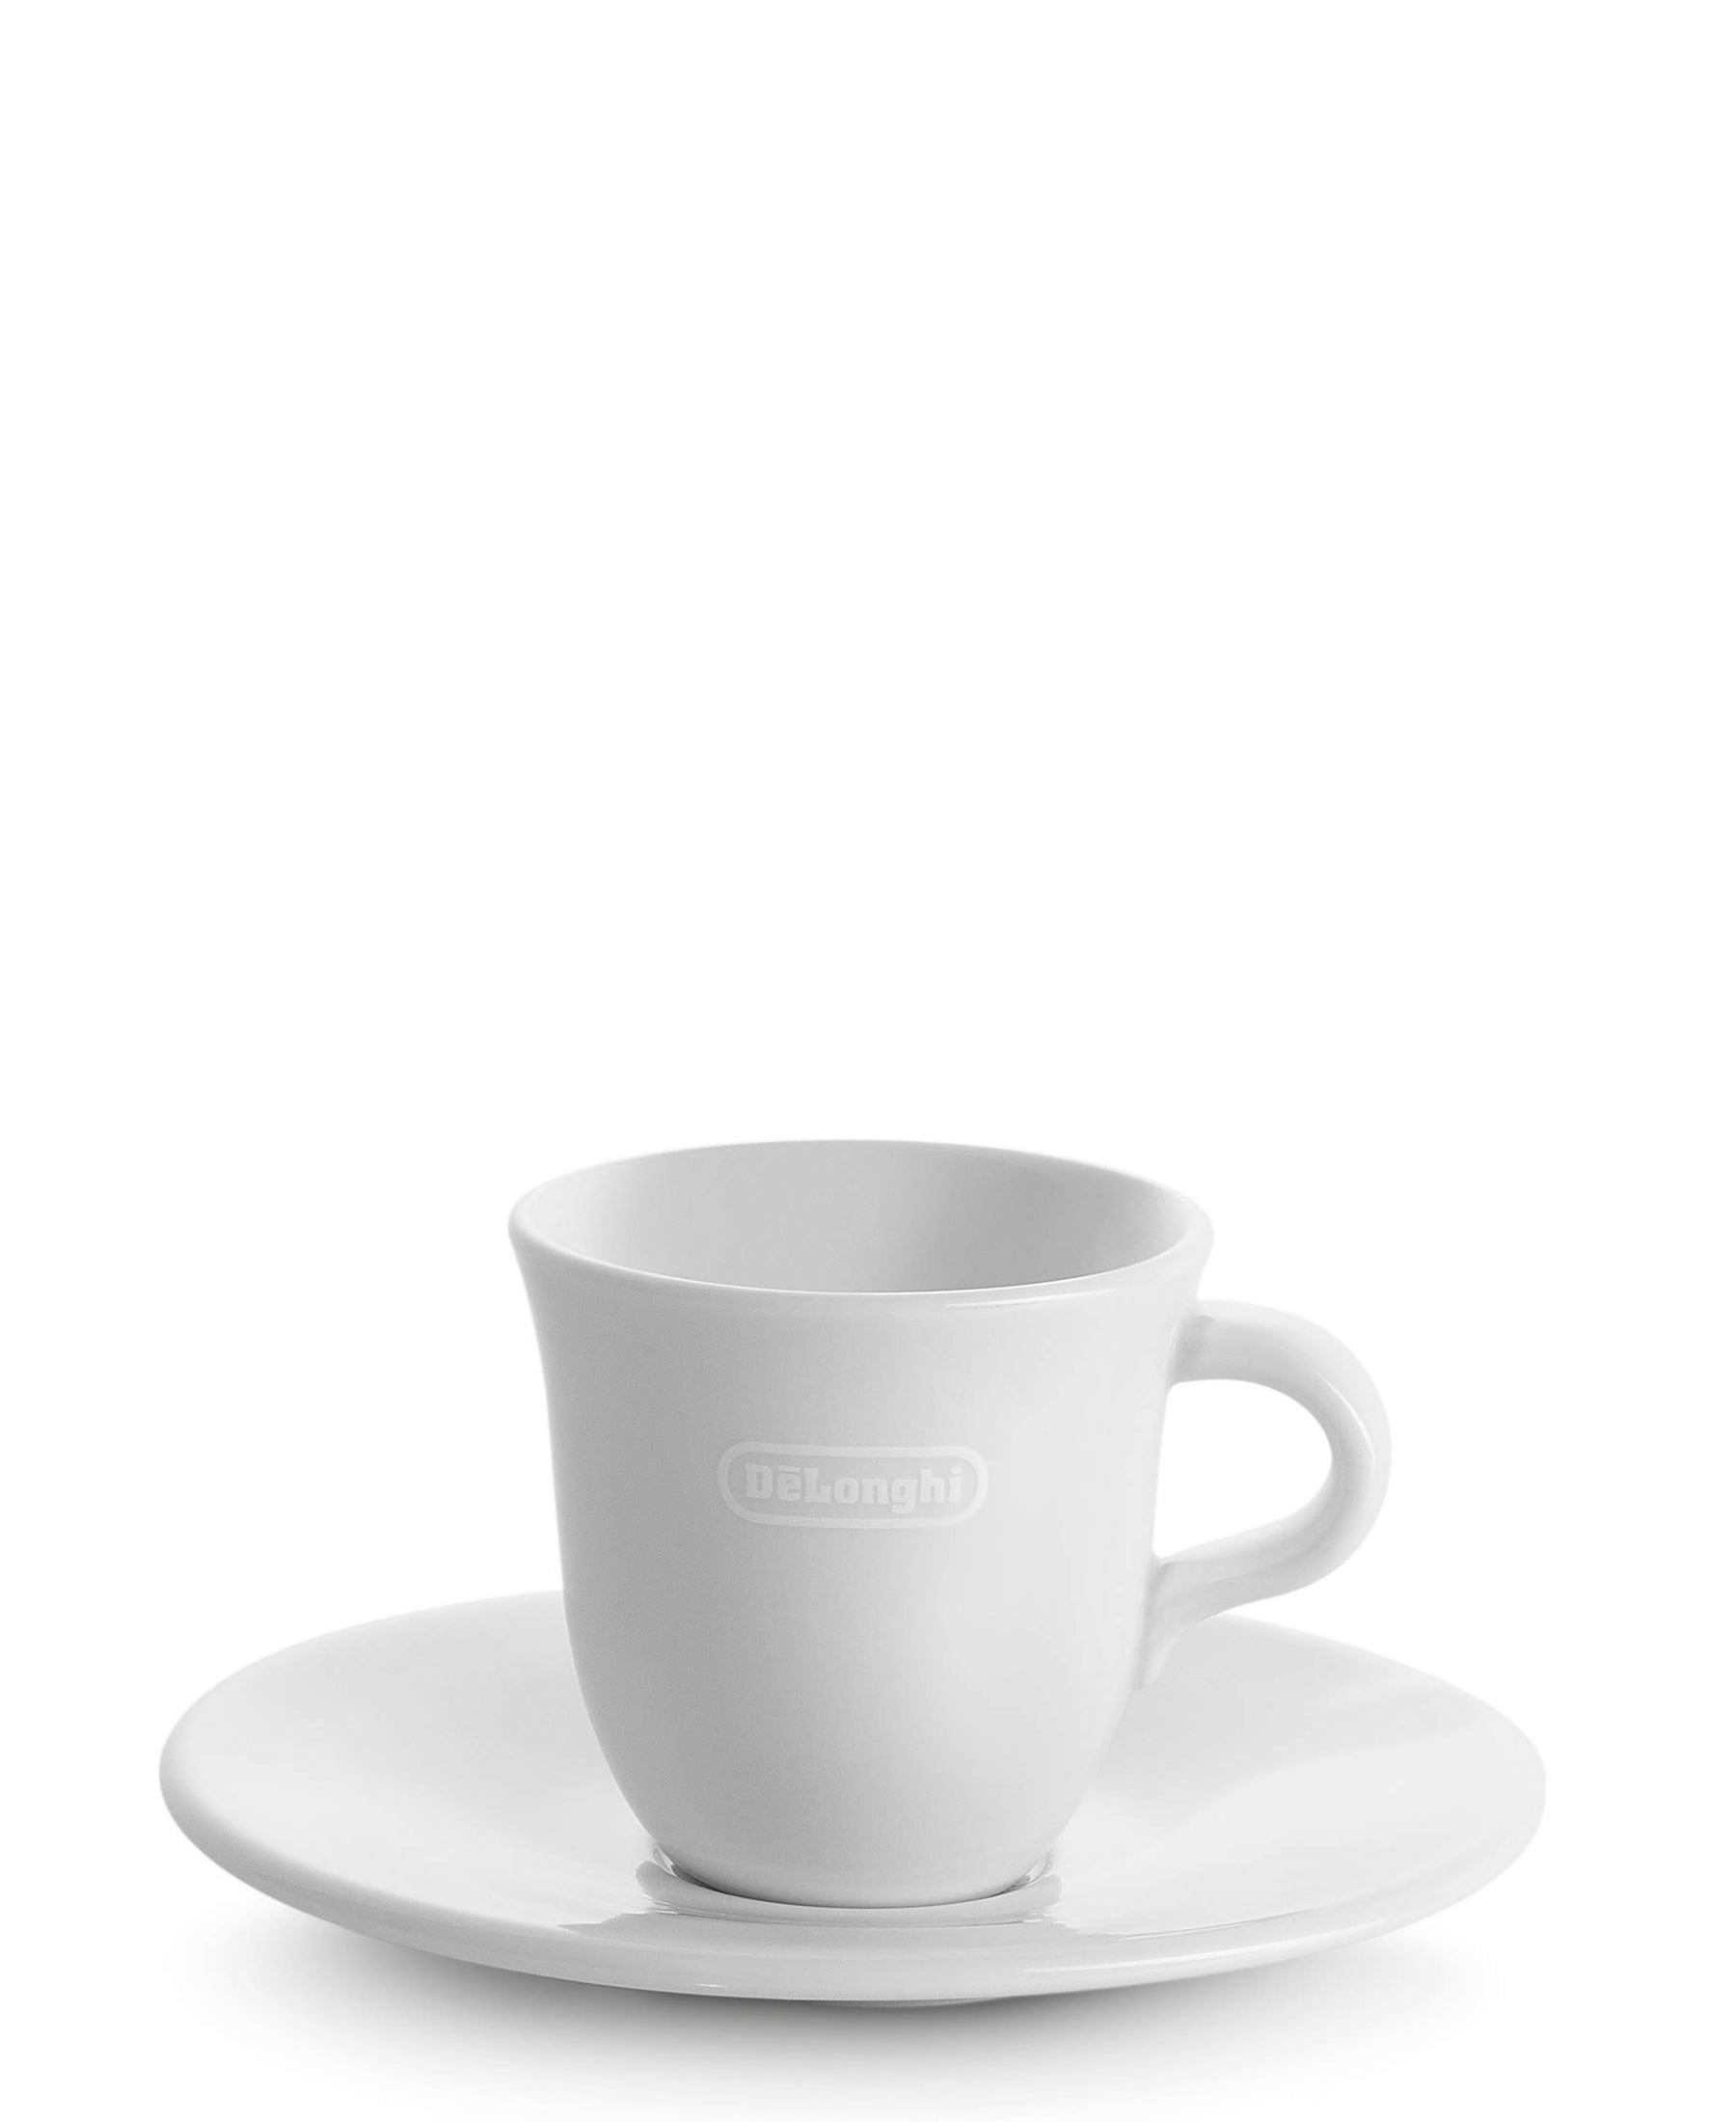 DeLonghi Porcelain Cappuccino Cups - White